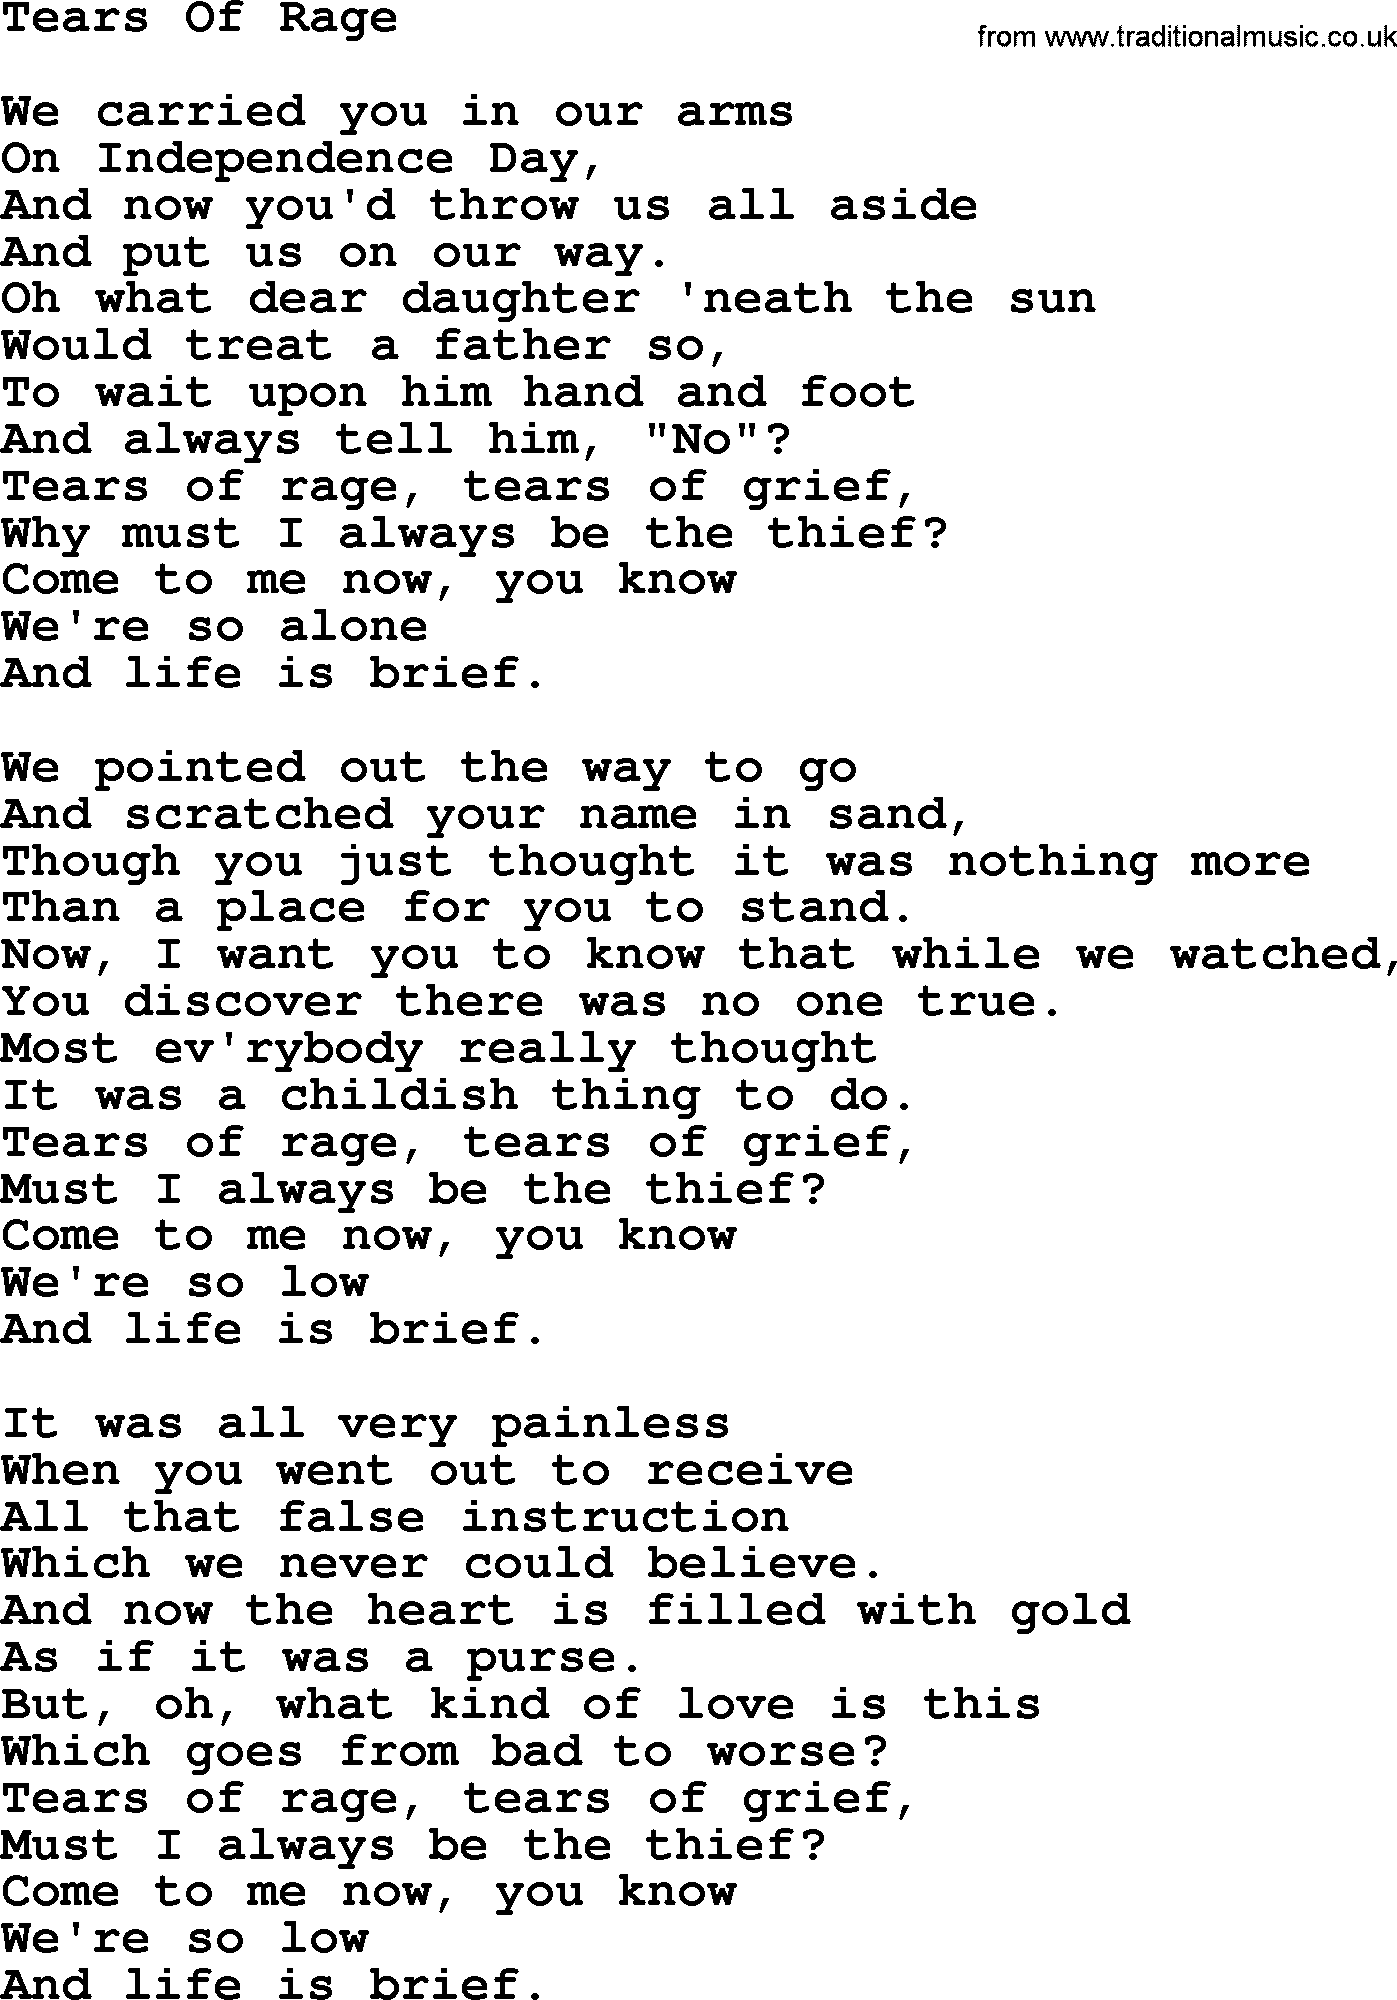 Joan Baez song Tears Of Rage, lyrics